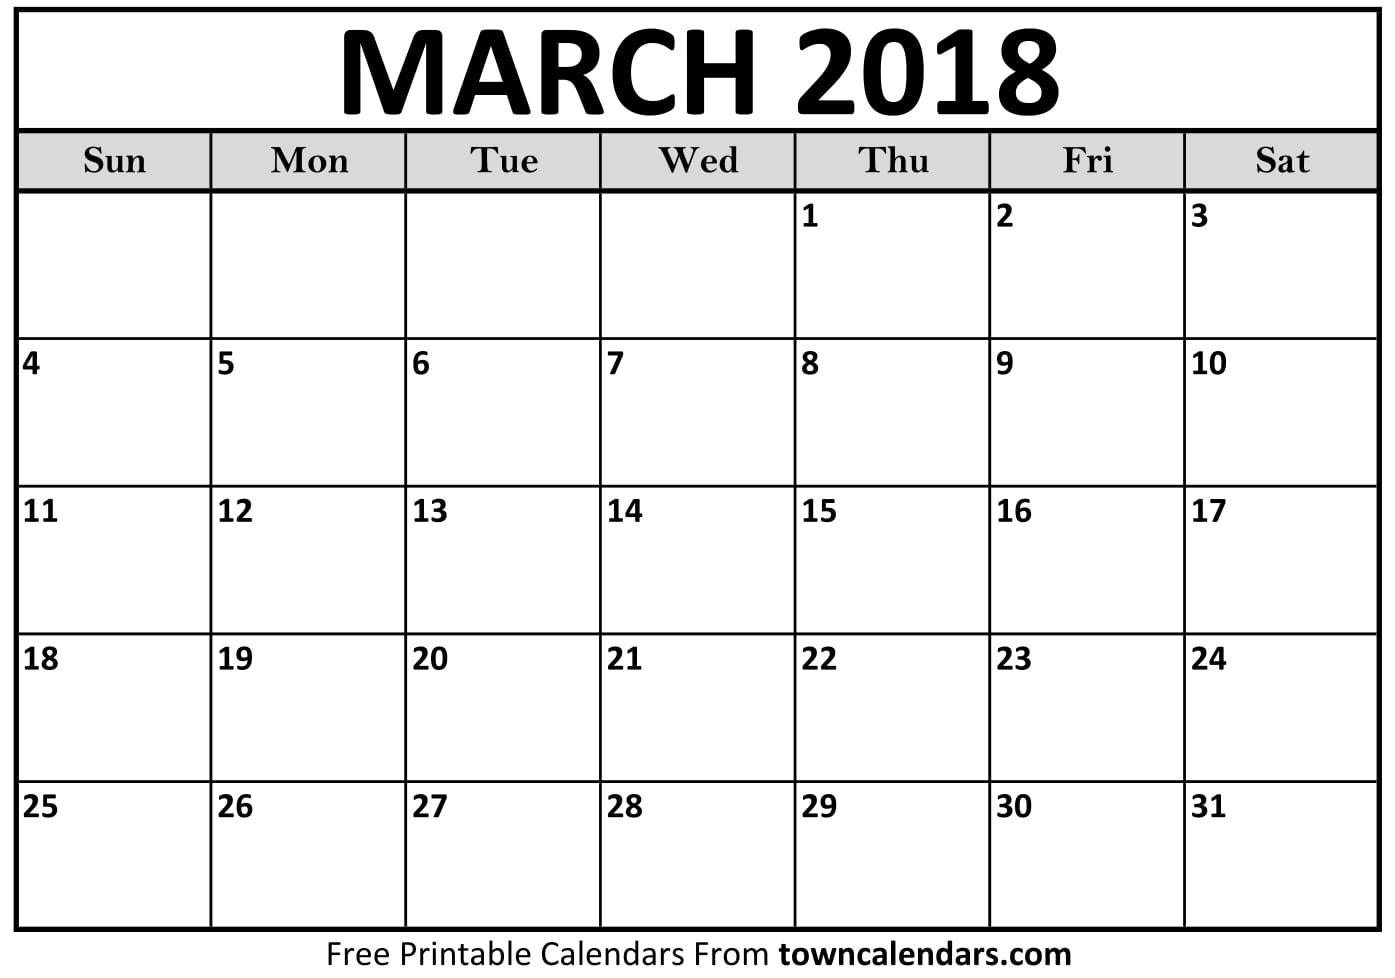 printable-march-2018-calendar-towncalendars